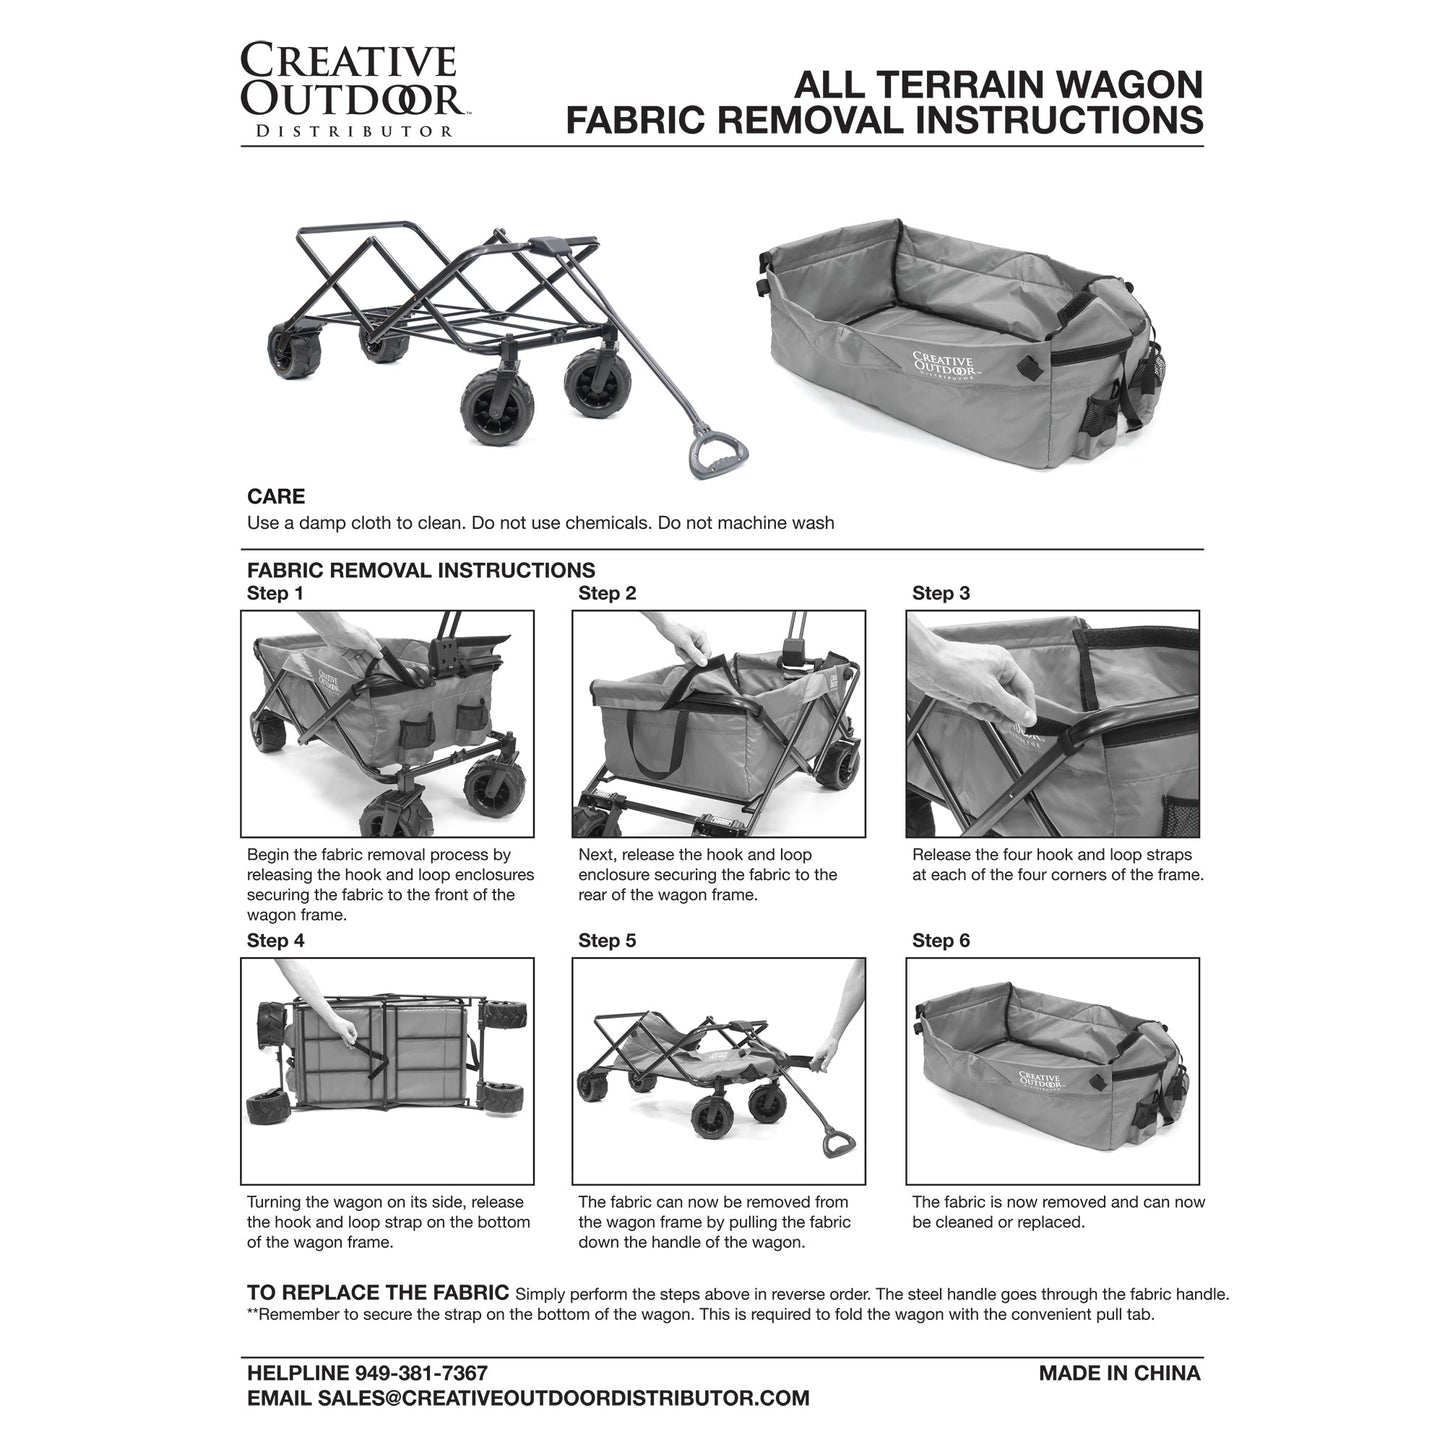 Two-Tone All-Terrain Folding Wagon - Custom Folding Wagons